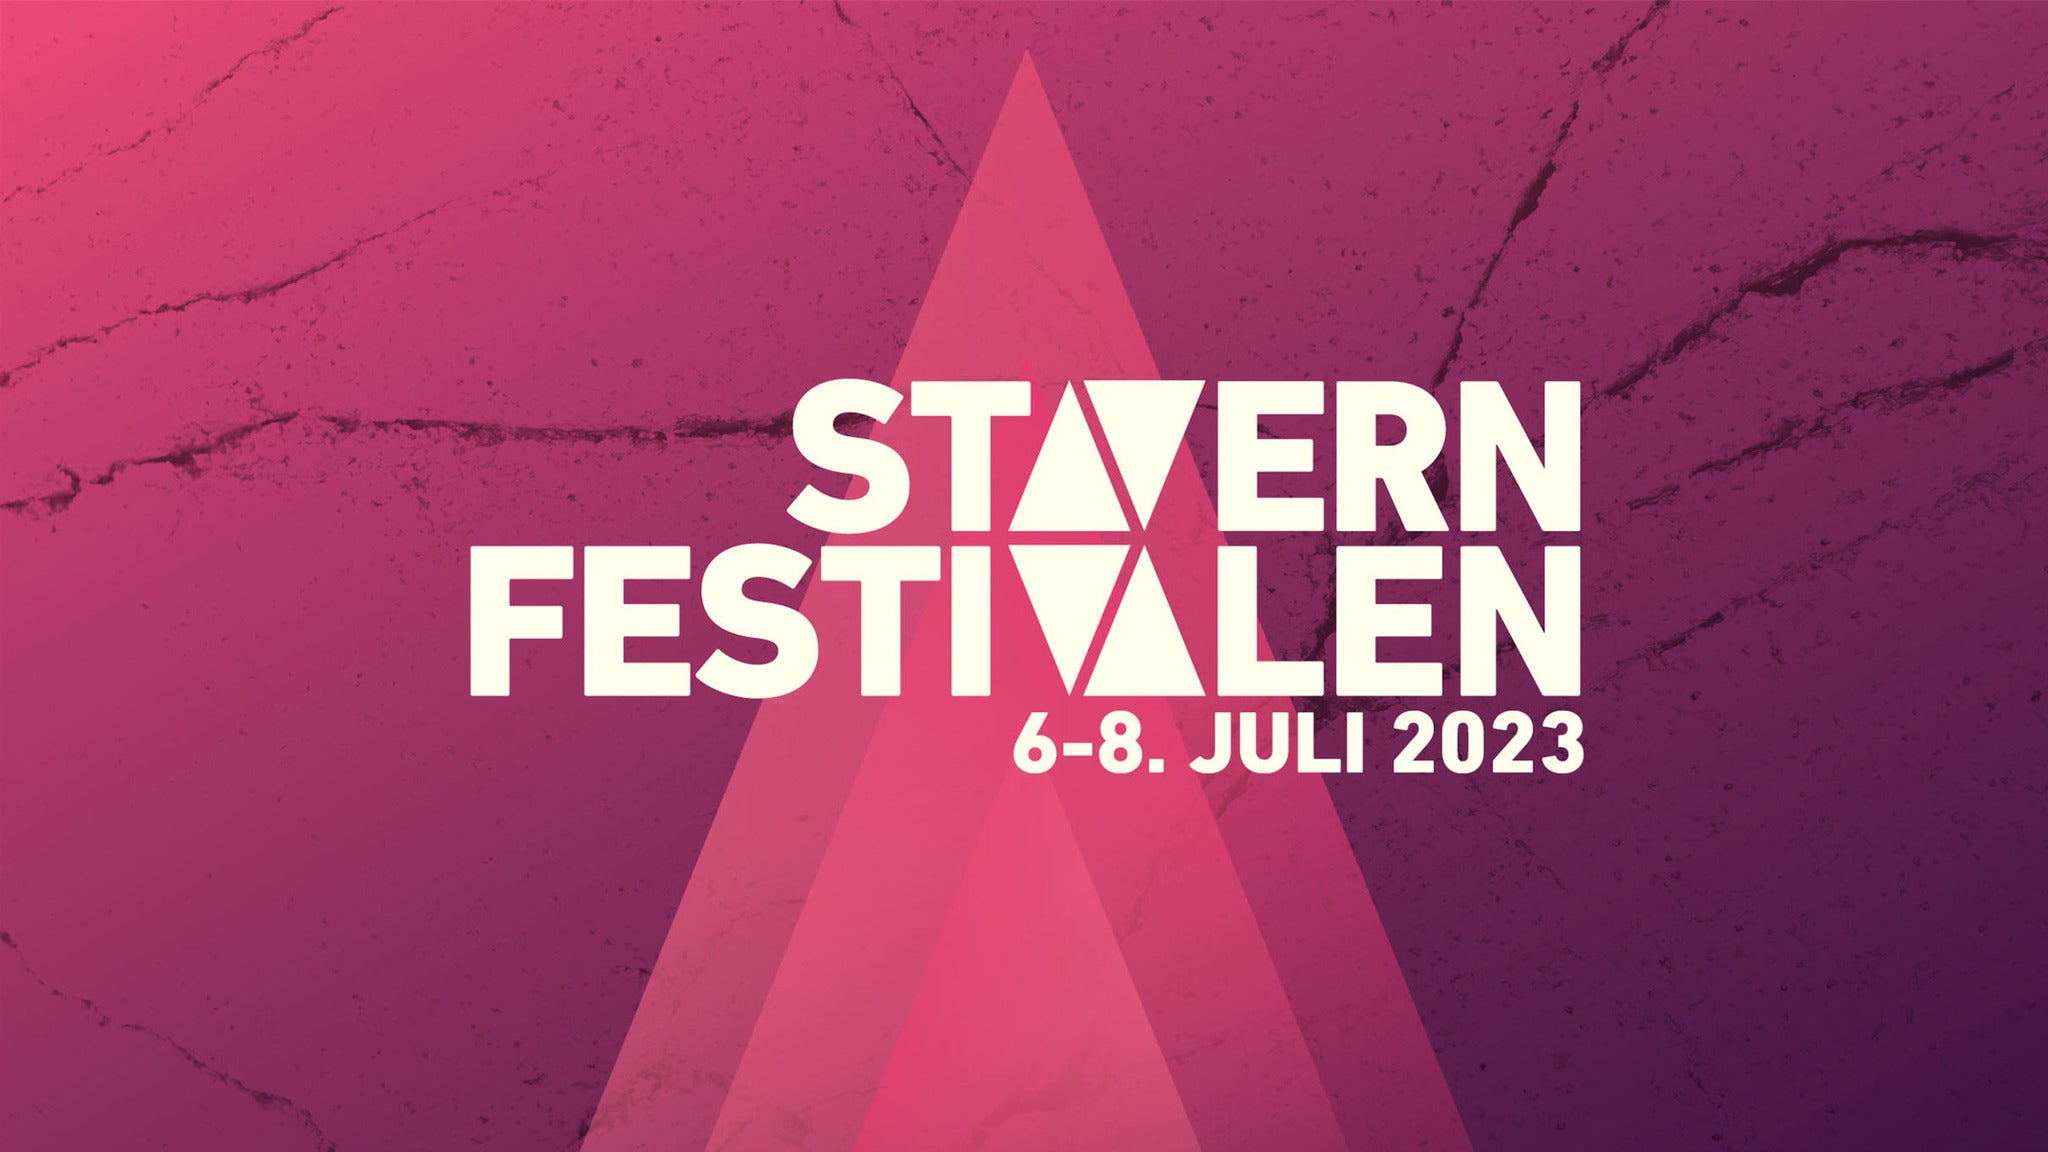 Stavernfestivalen presale information on freepresalepasswords.com